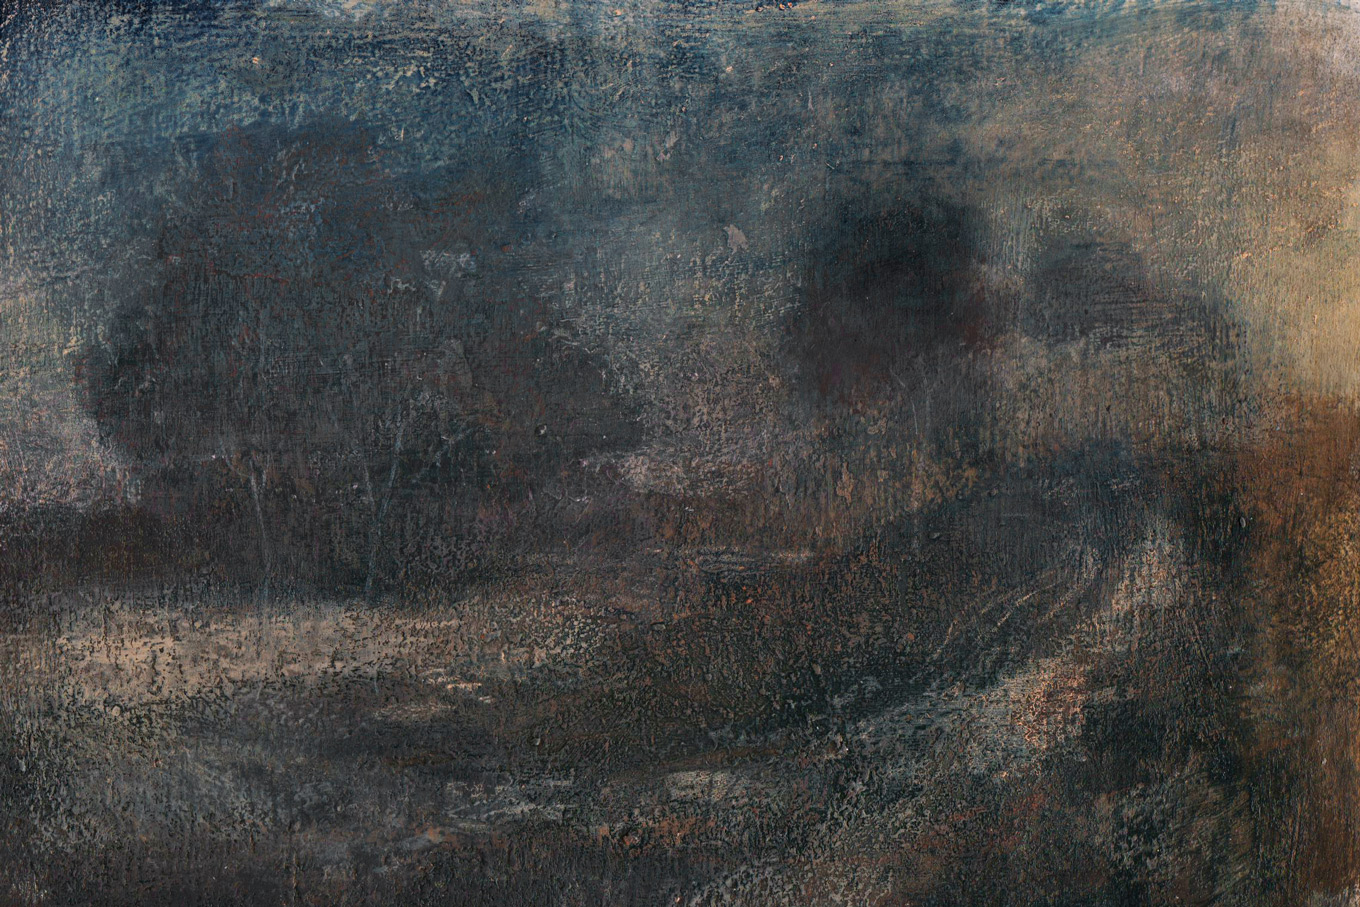 L1224 - Nicholas Herbert, British Artist, mixed media landscape painting of Chobham Common, mixed media on paper, 2020